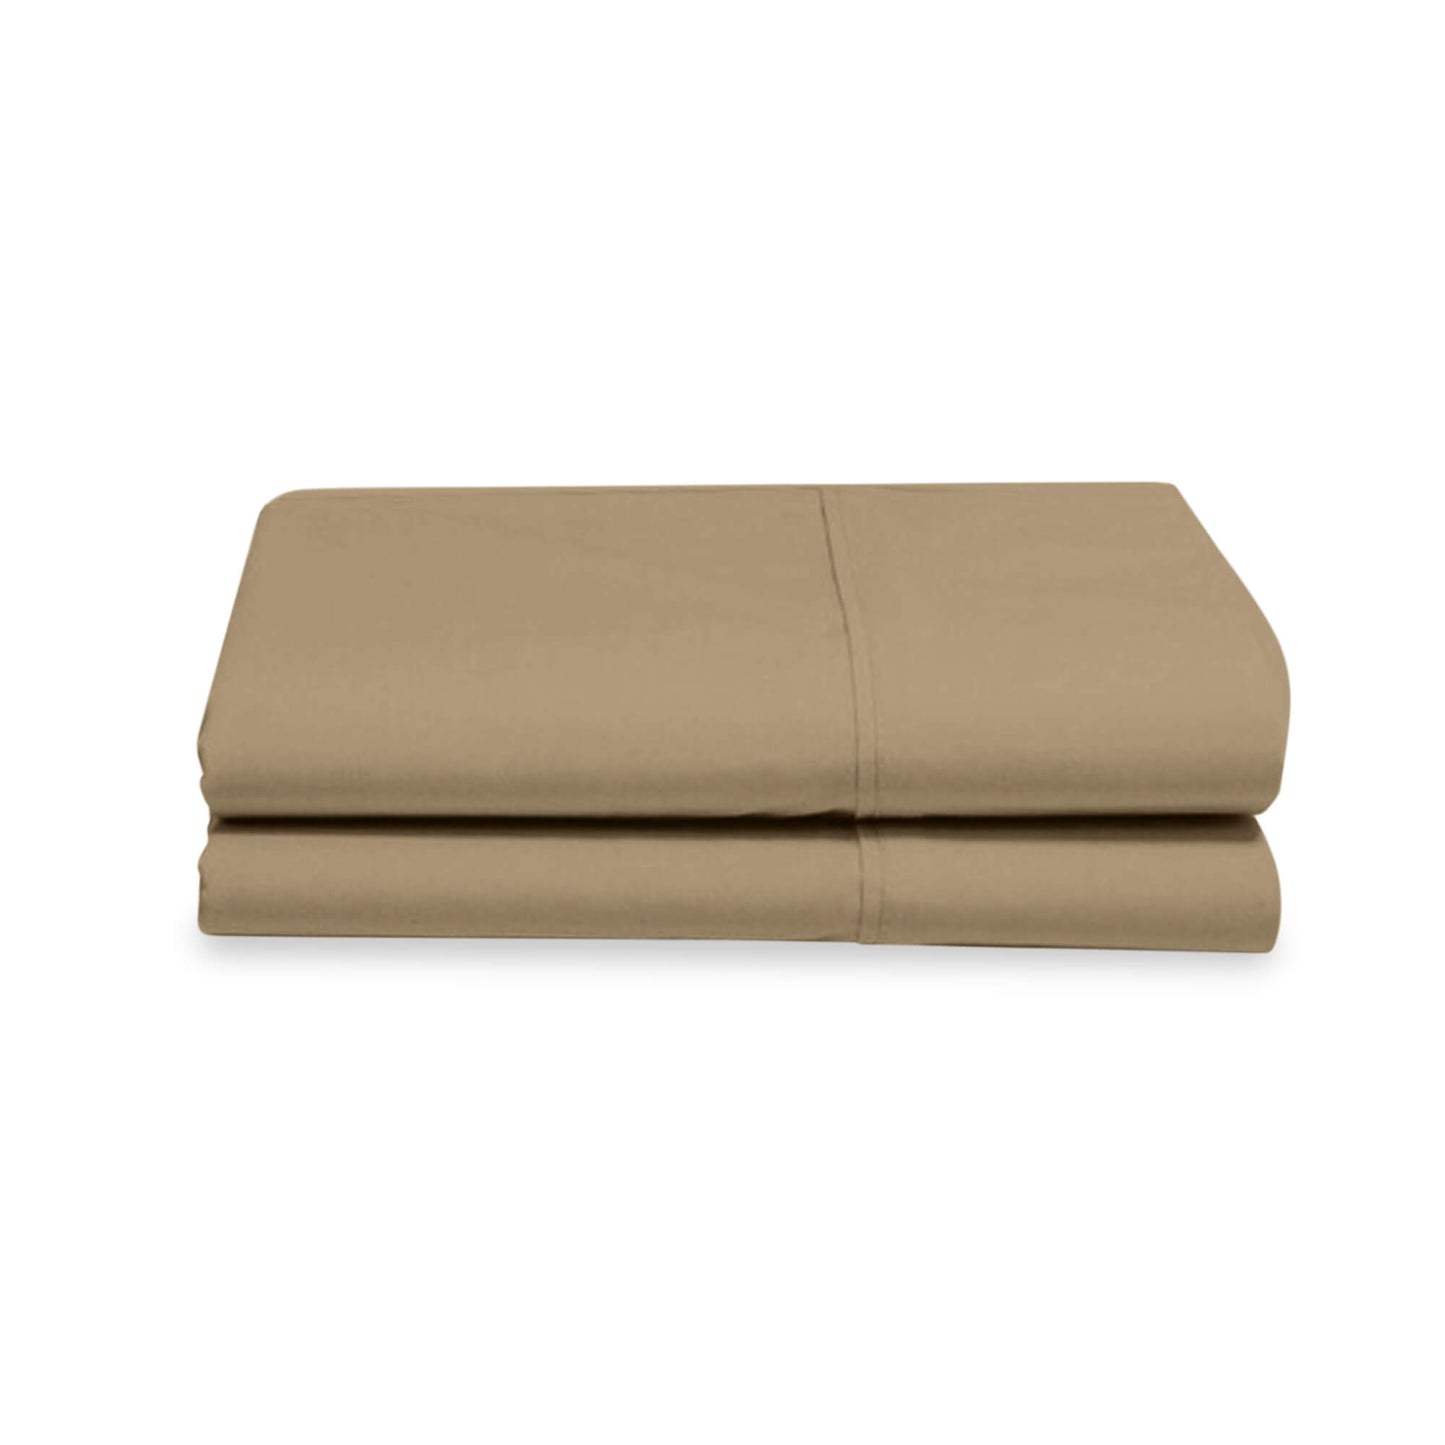 Delilah Home 100% Organic Cotton Pillow Cases
Jungle Pillows